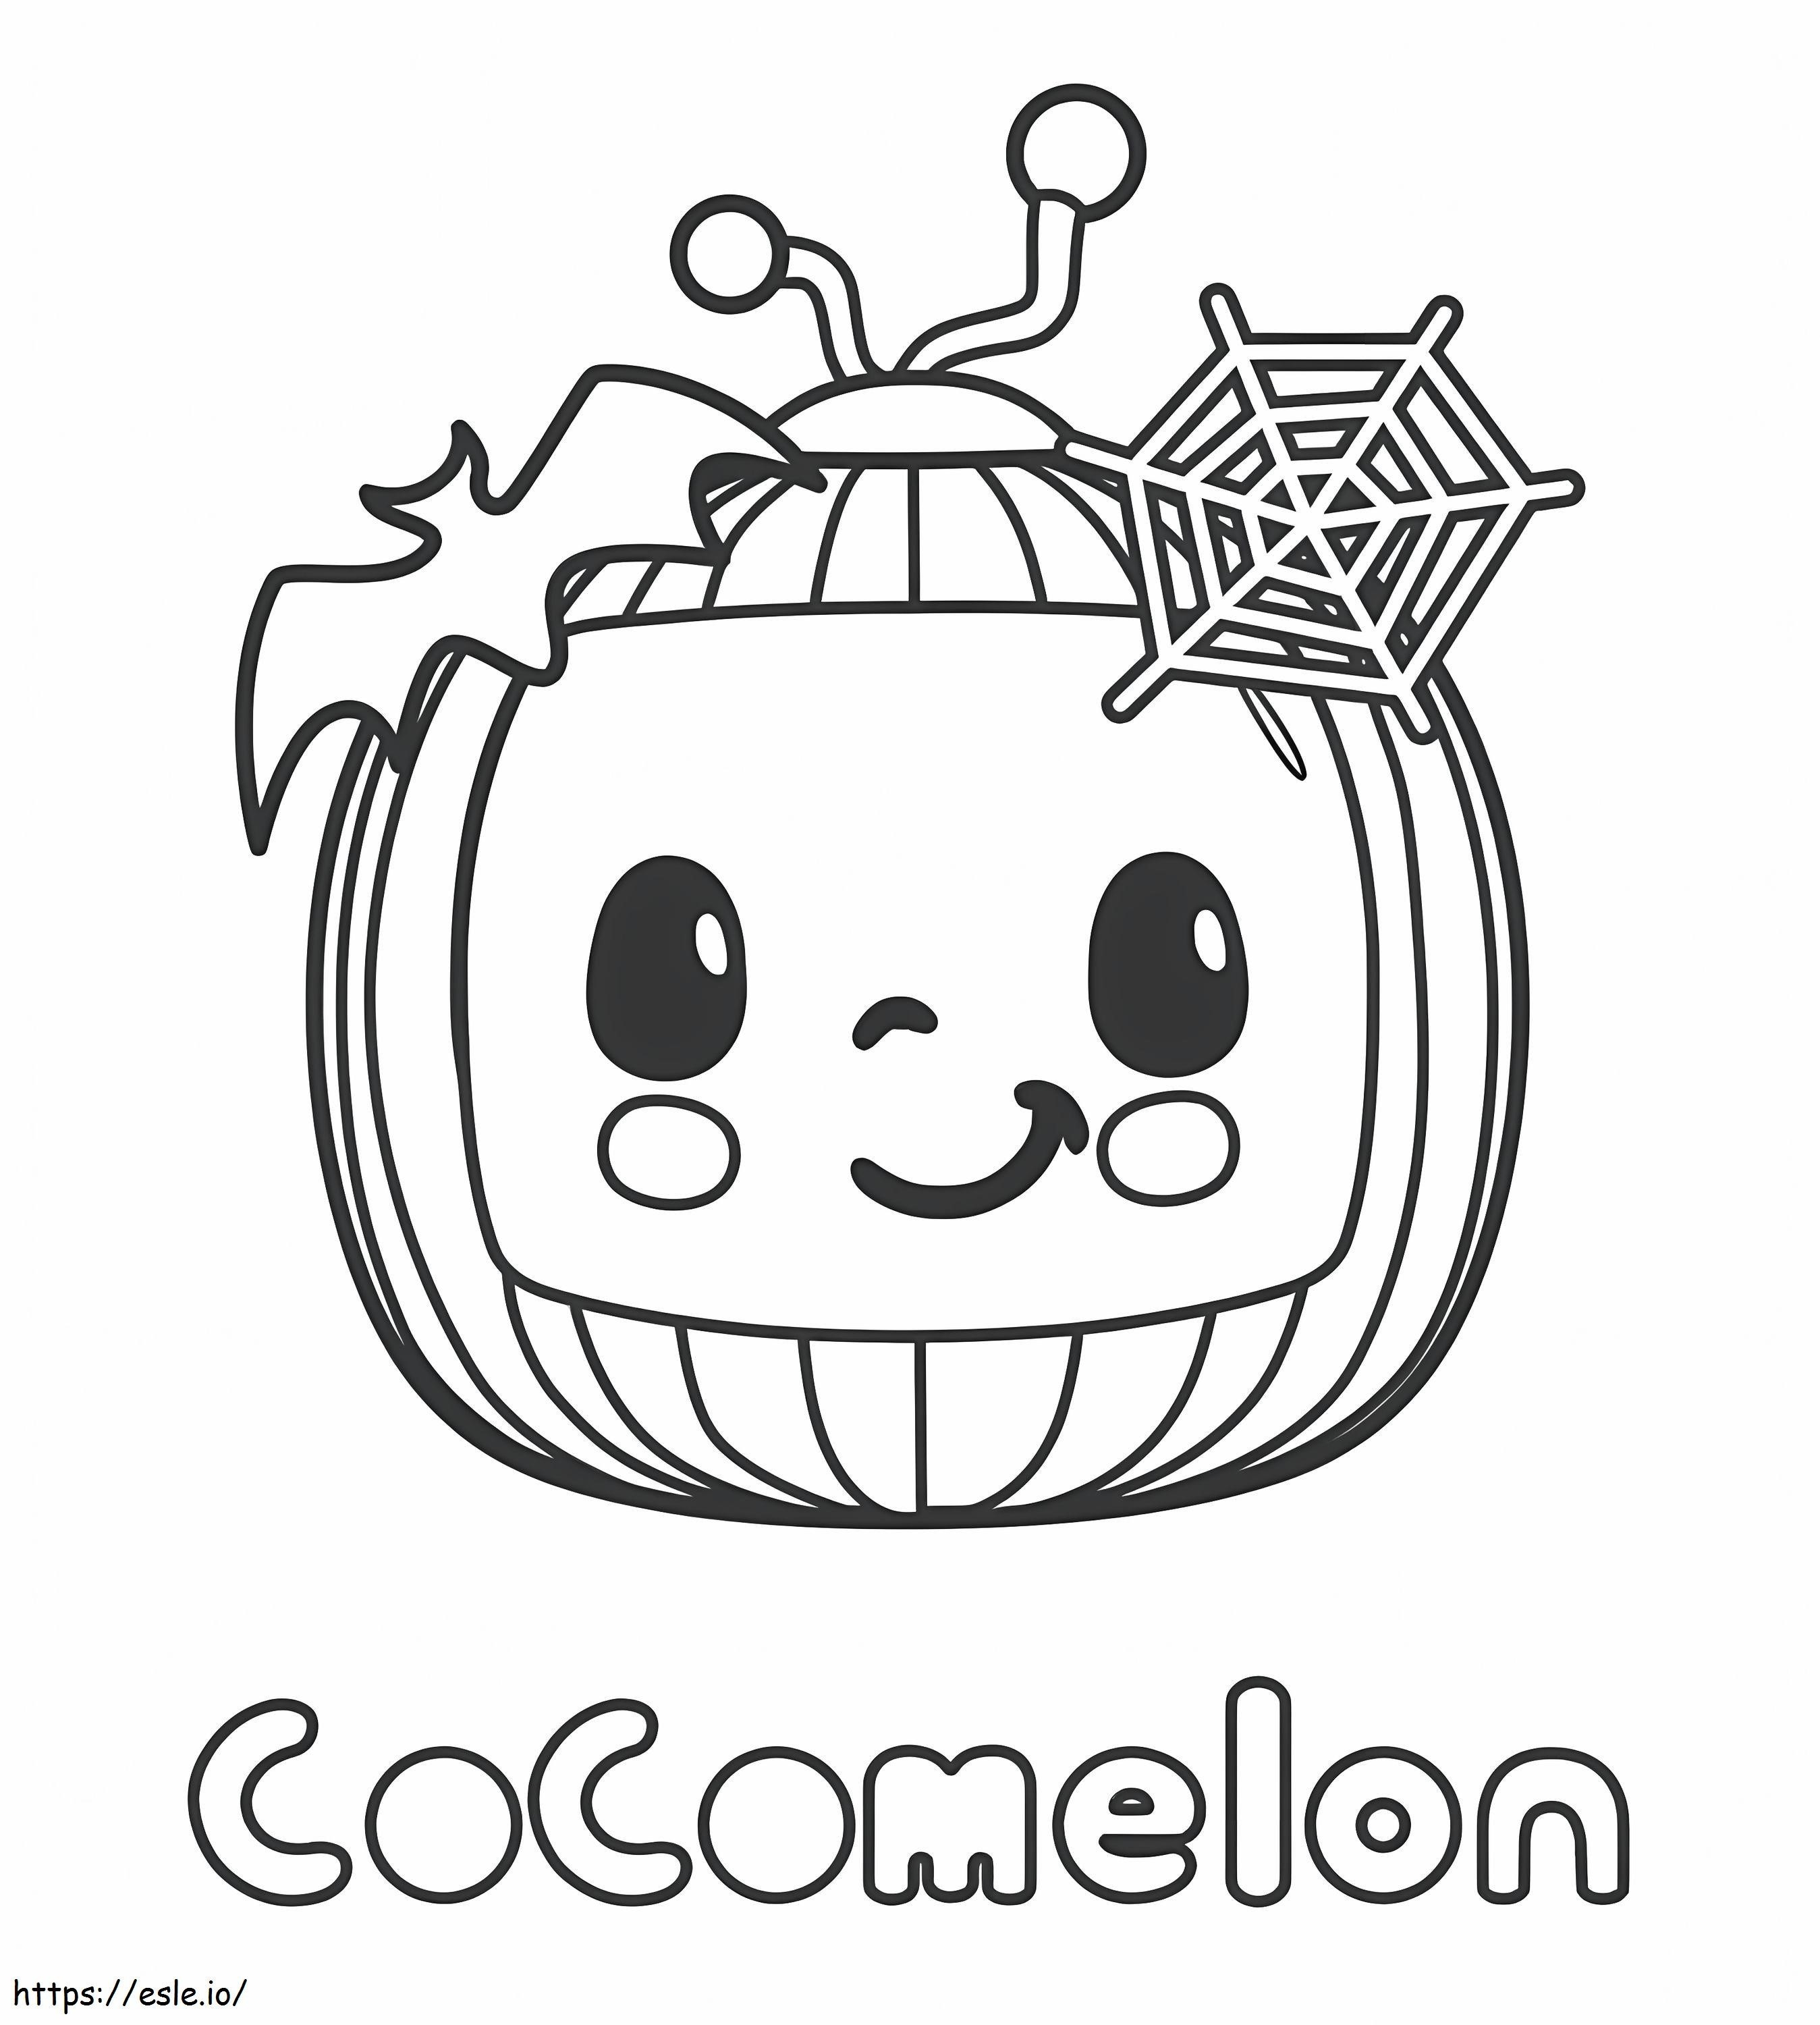 Halloween Cocomelon Logo coloring page